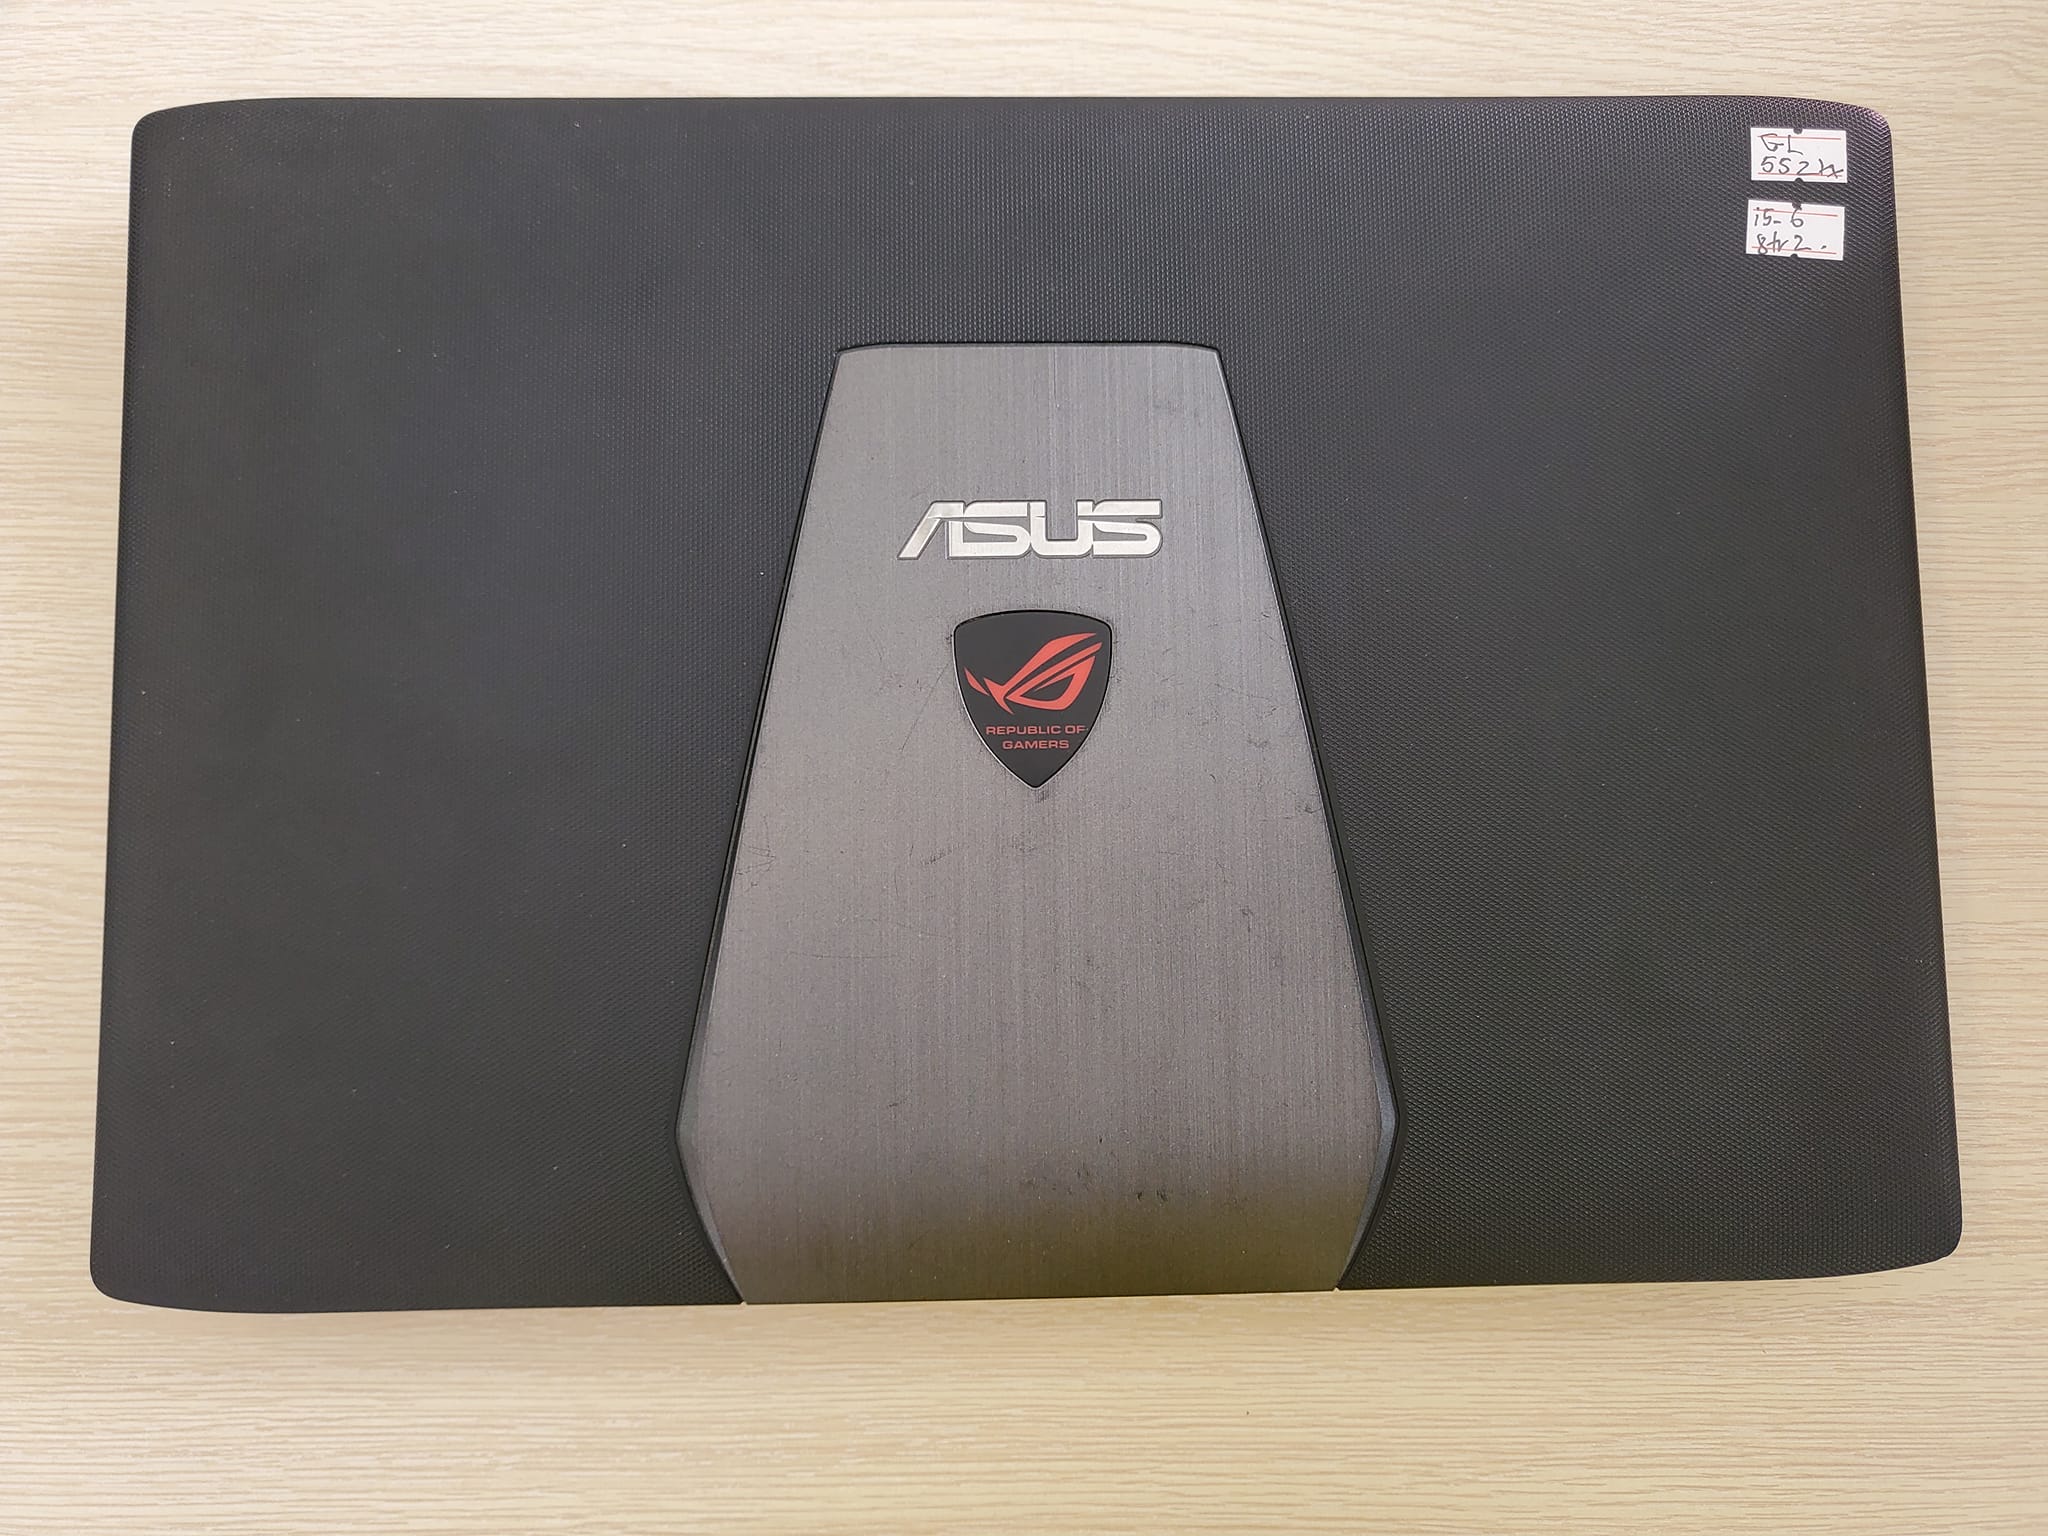 Laptop cũ Asus Gaming GL552VX